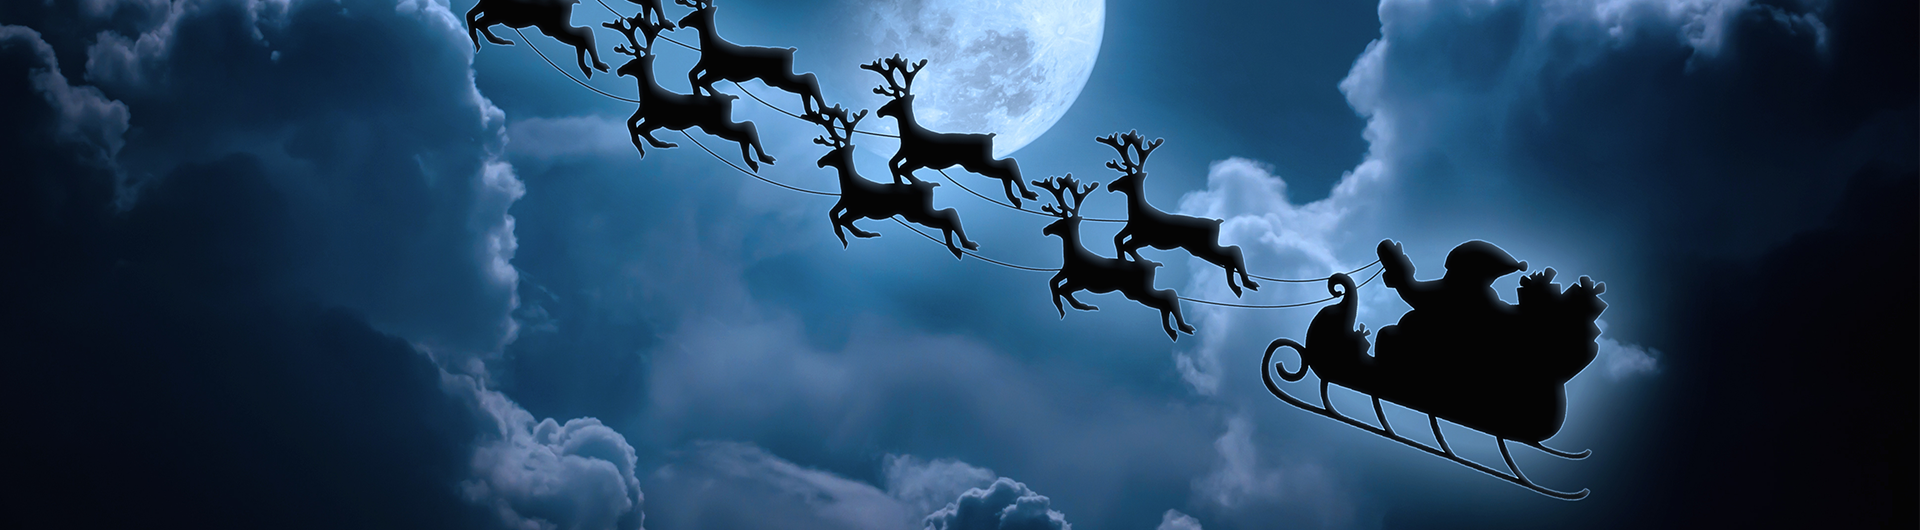 Santa flying his sleigh